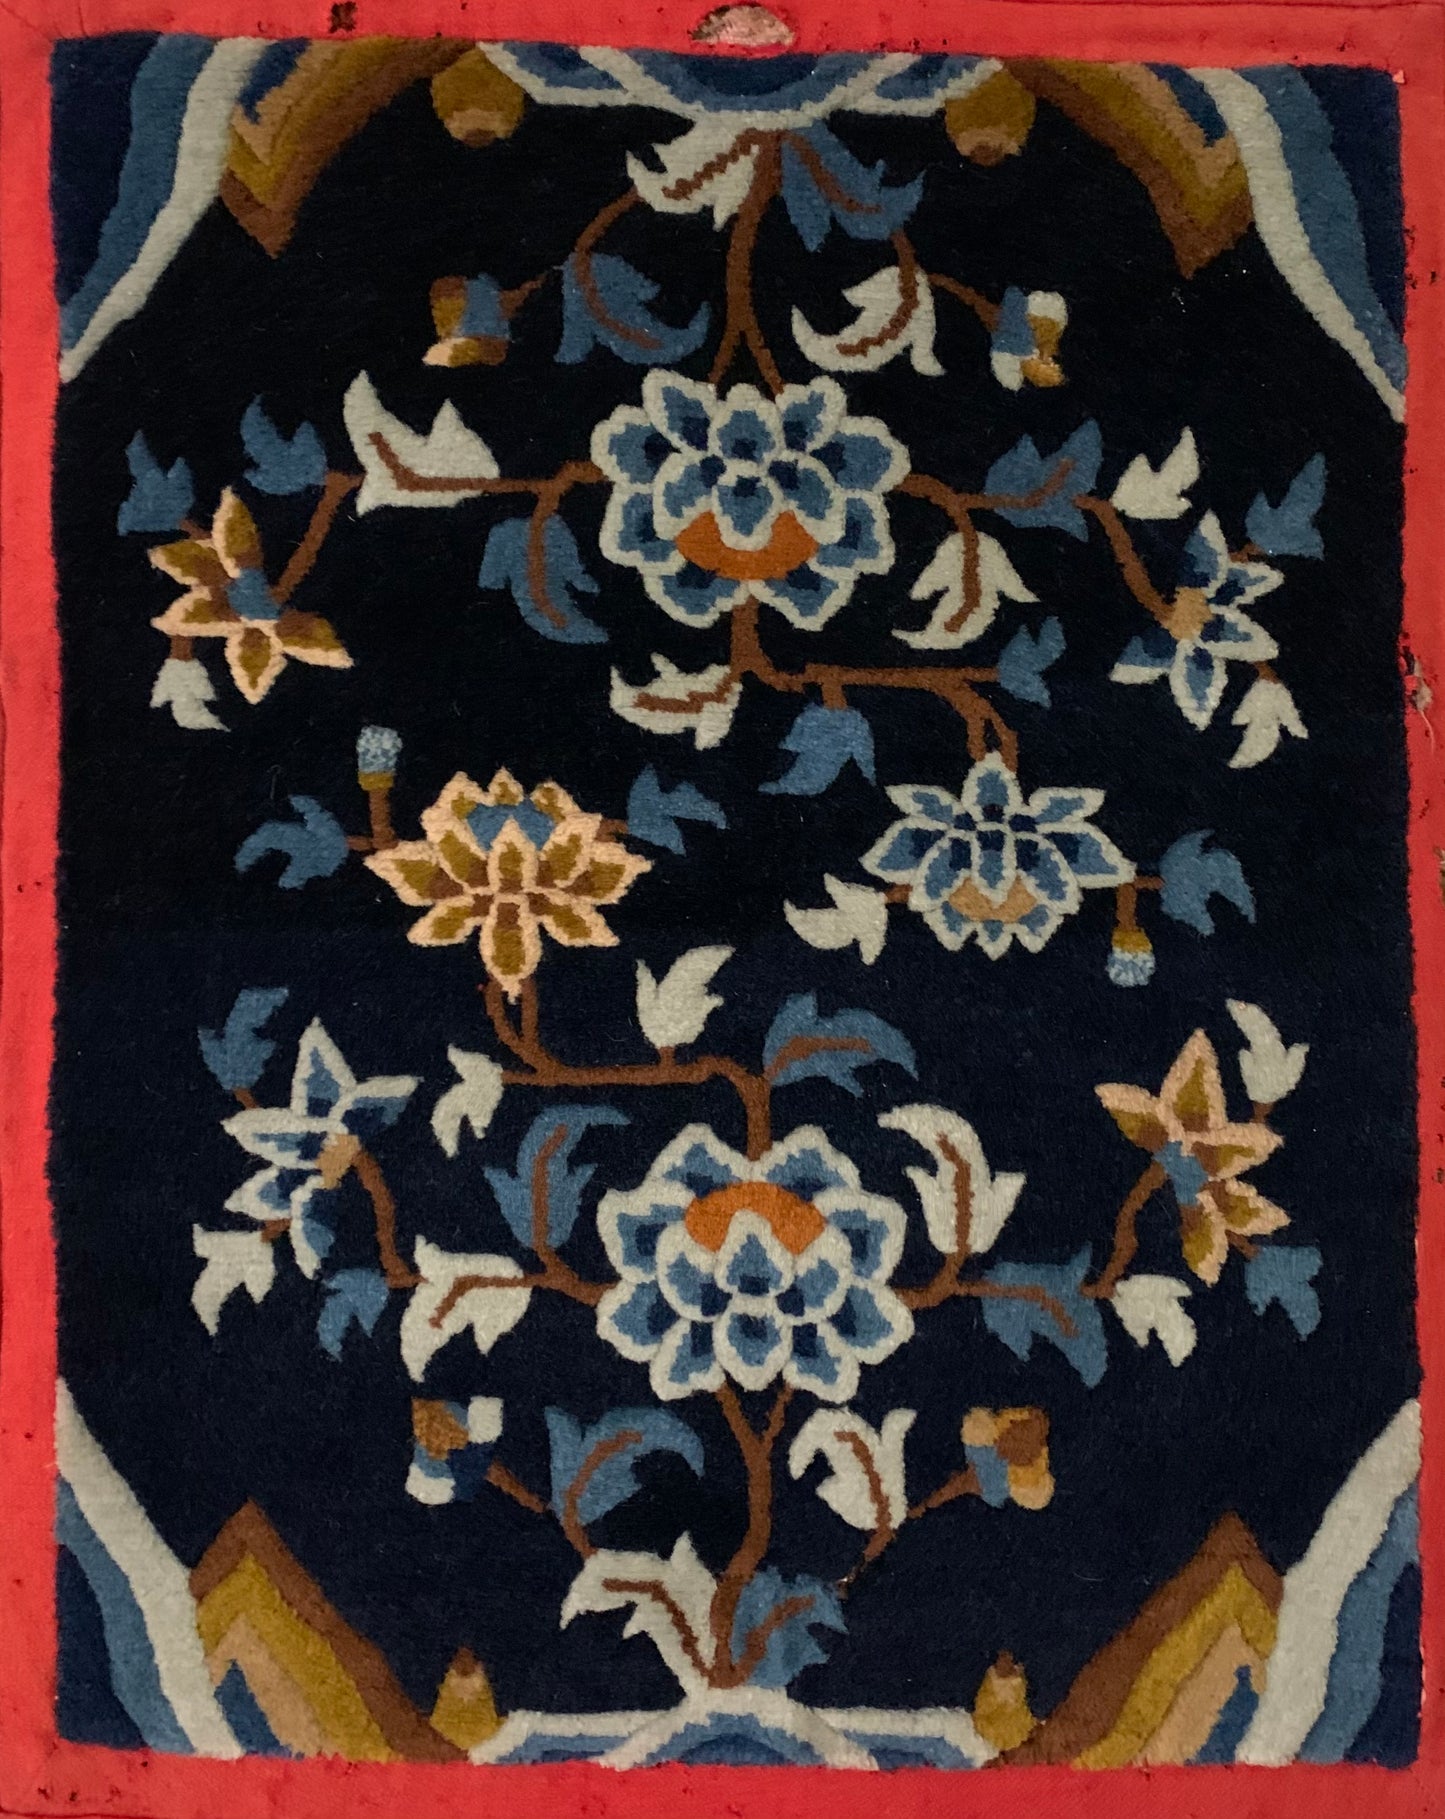 A vintage Tibetan meditation rug